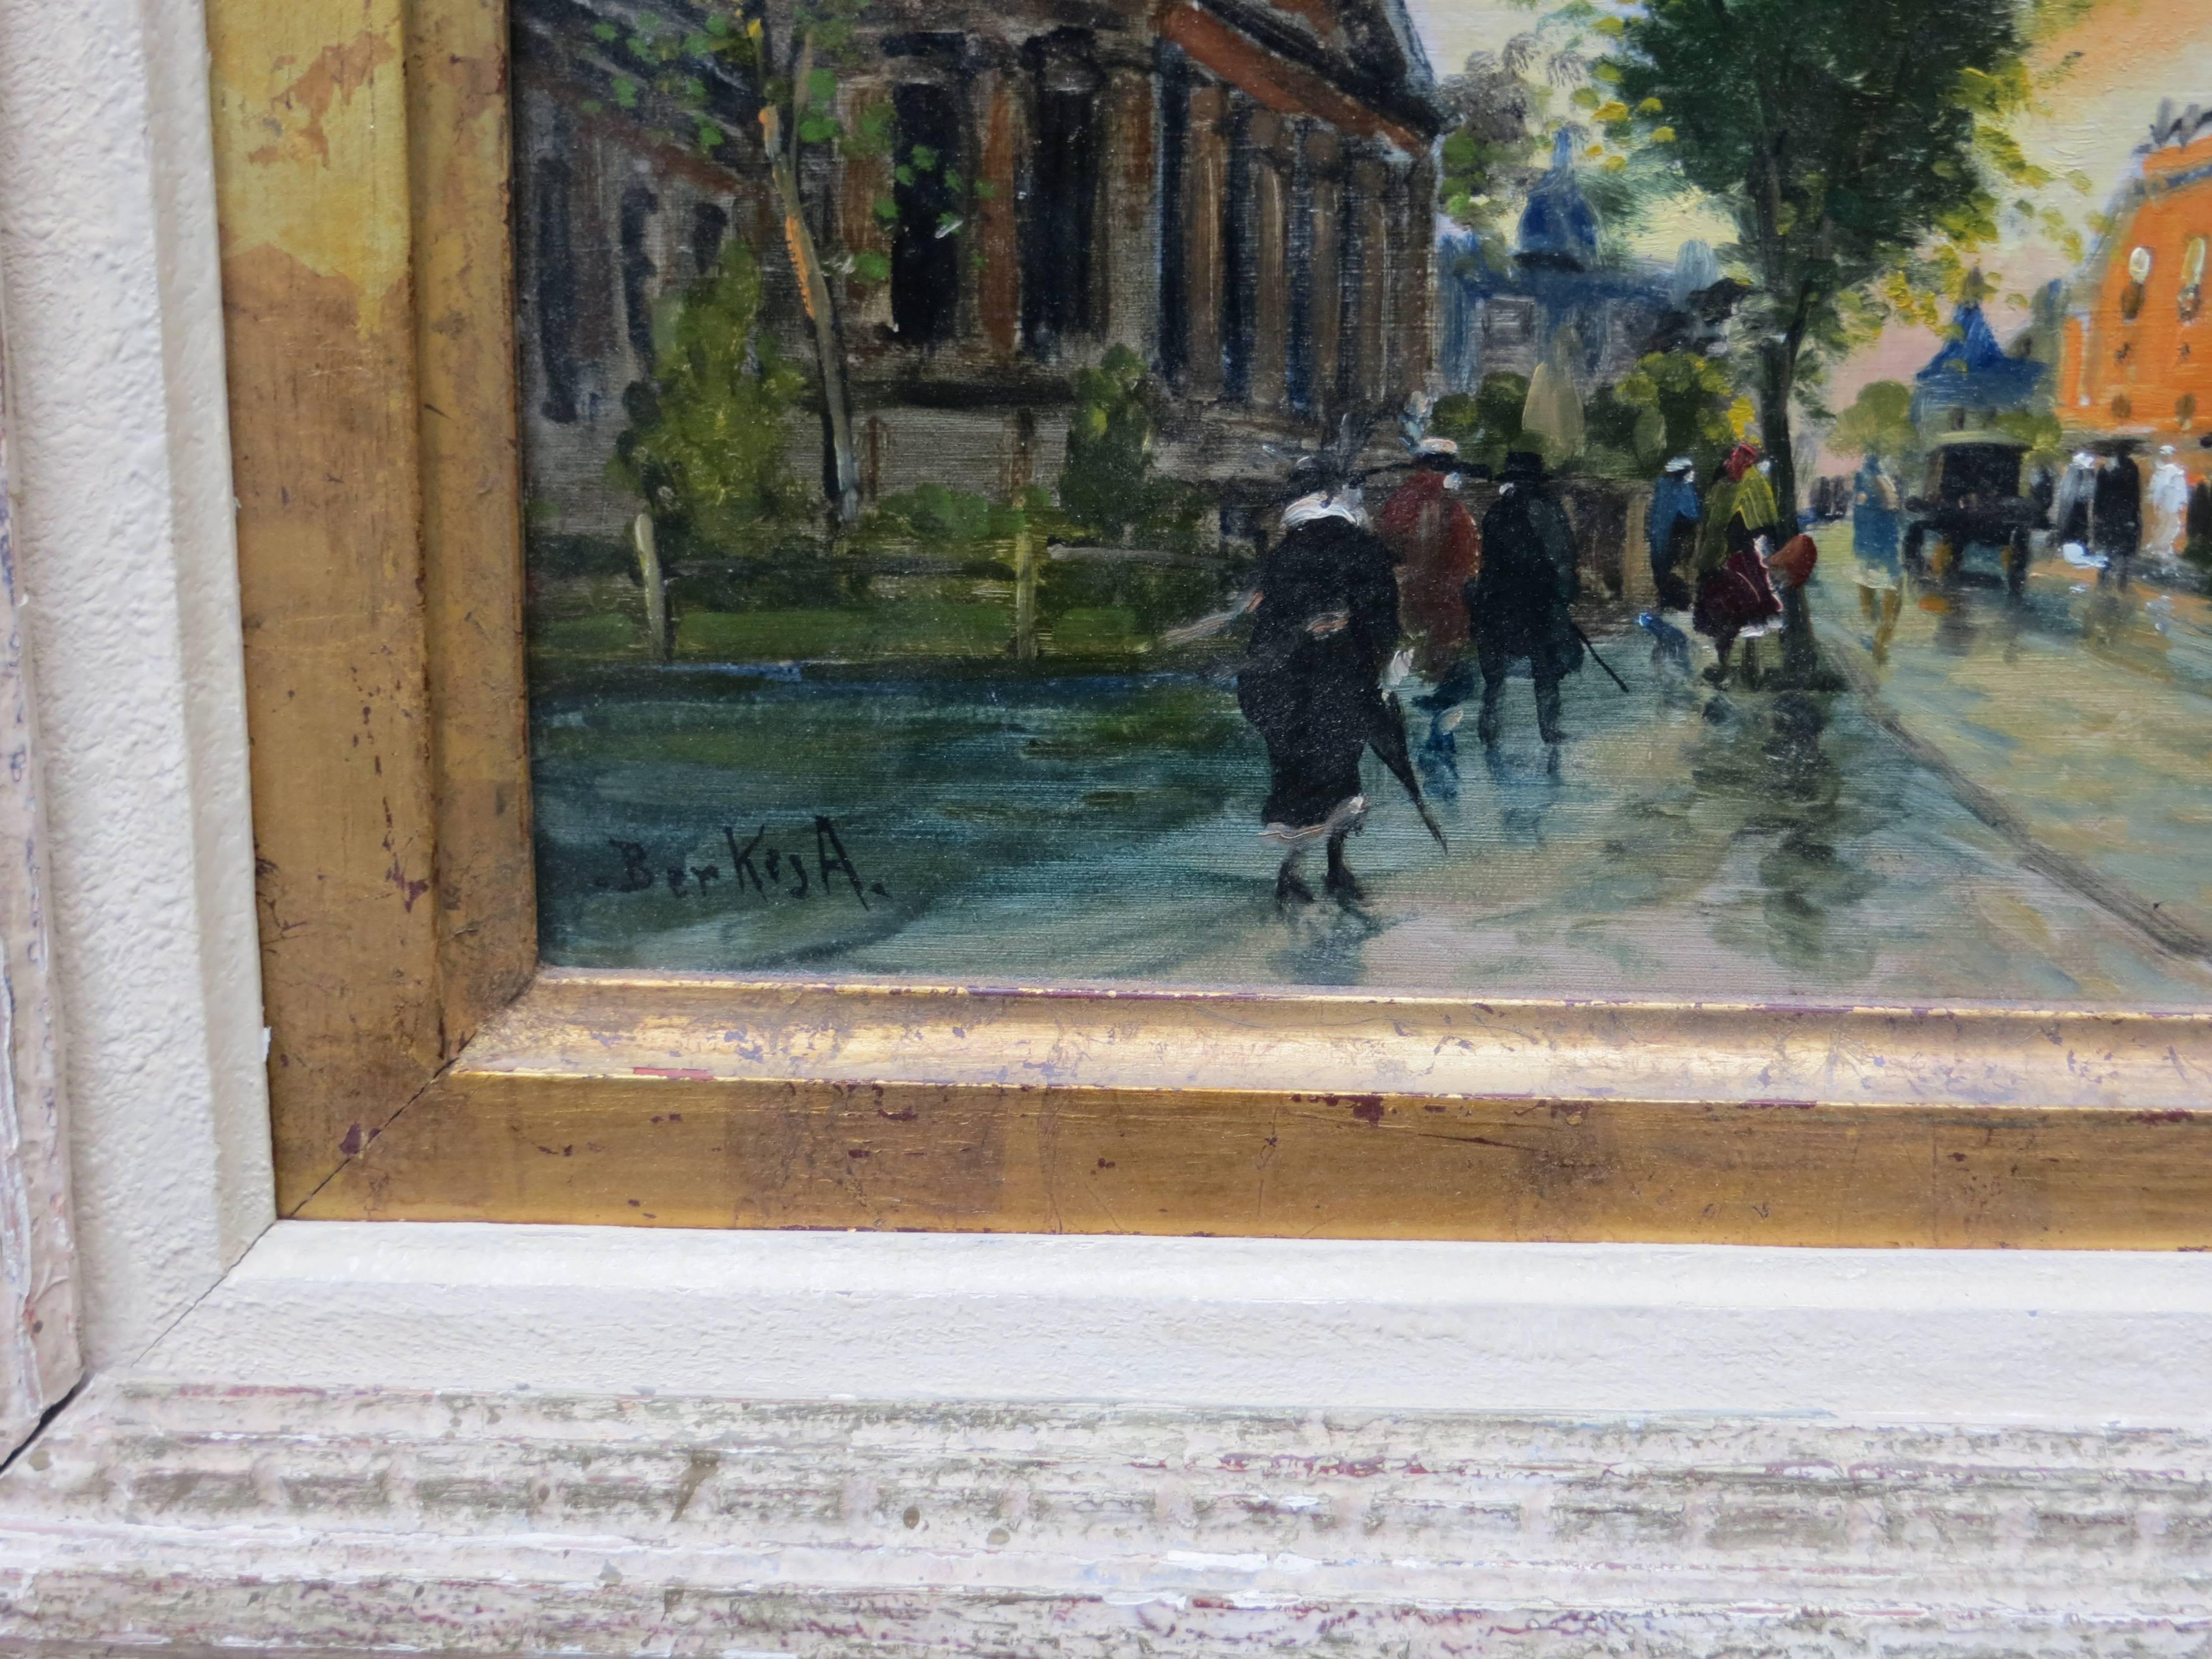 The Madeleine Place in Paris by Berkes  - Impressionist Painting by Antal Berkes